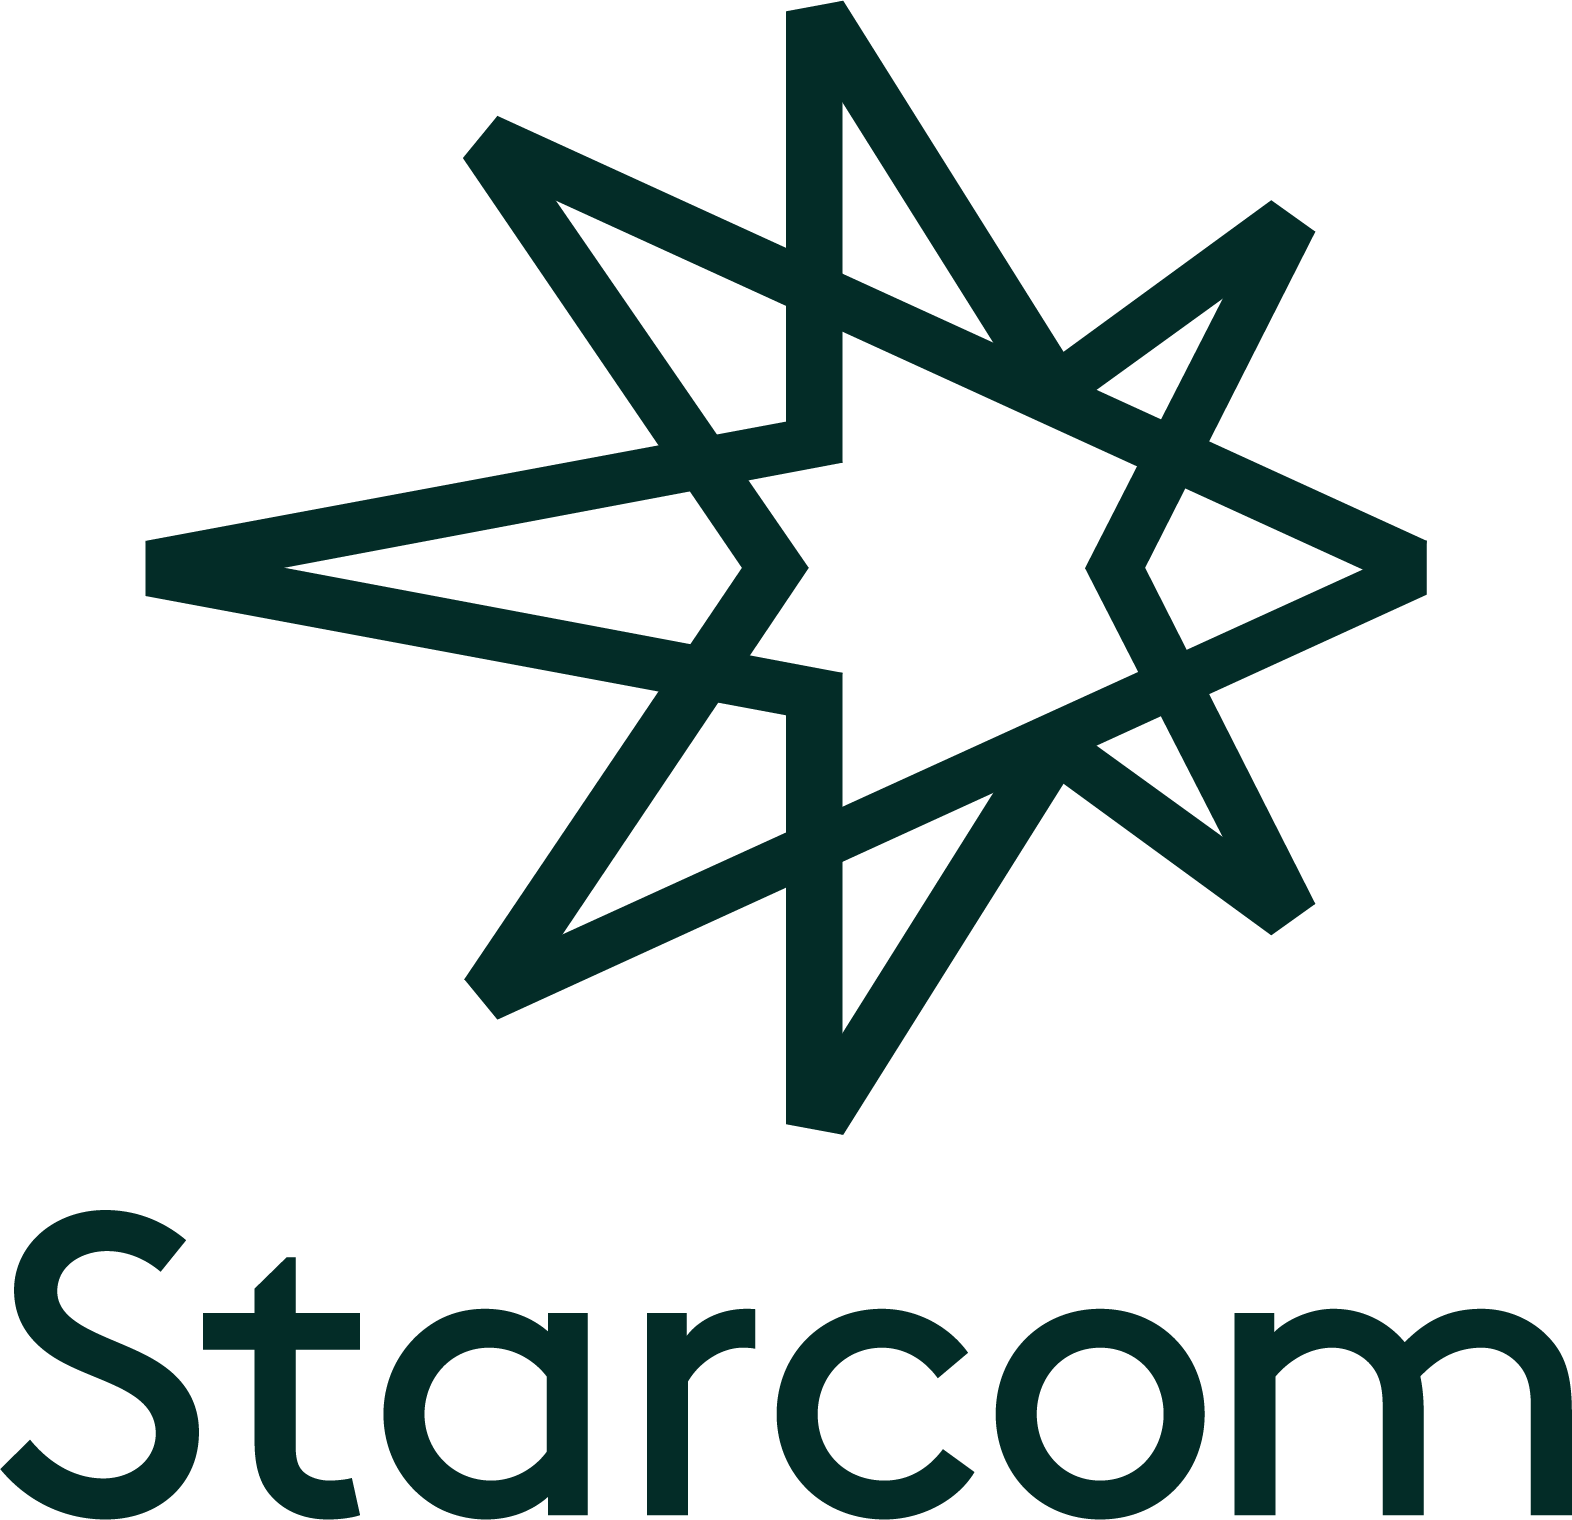 Starcom logo